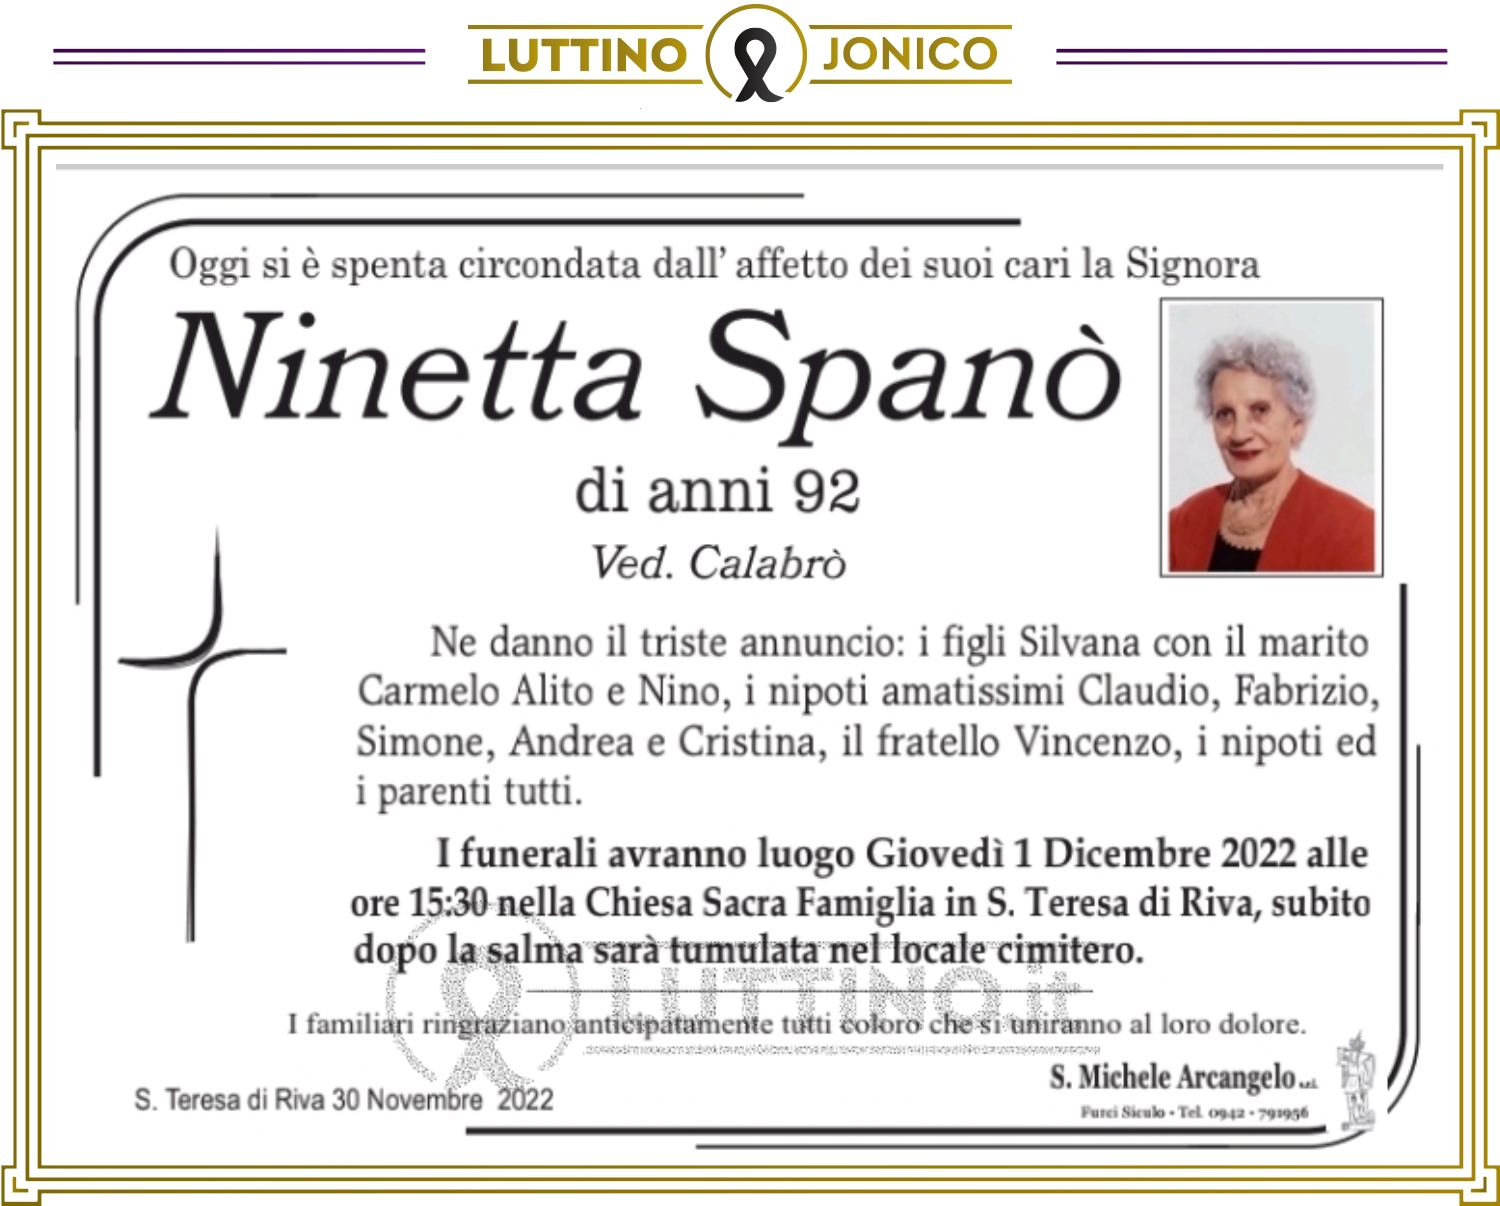 Ninetta Spanò